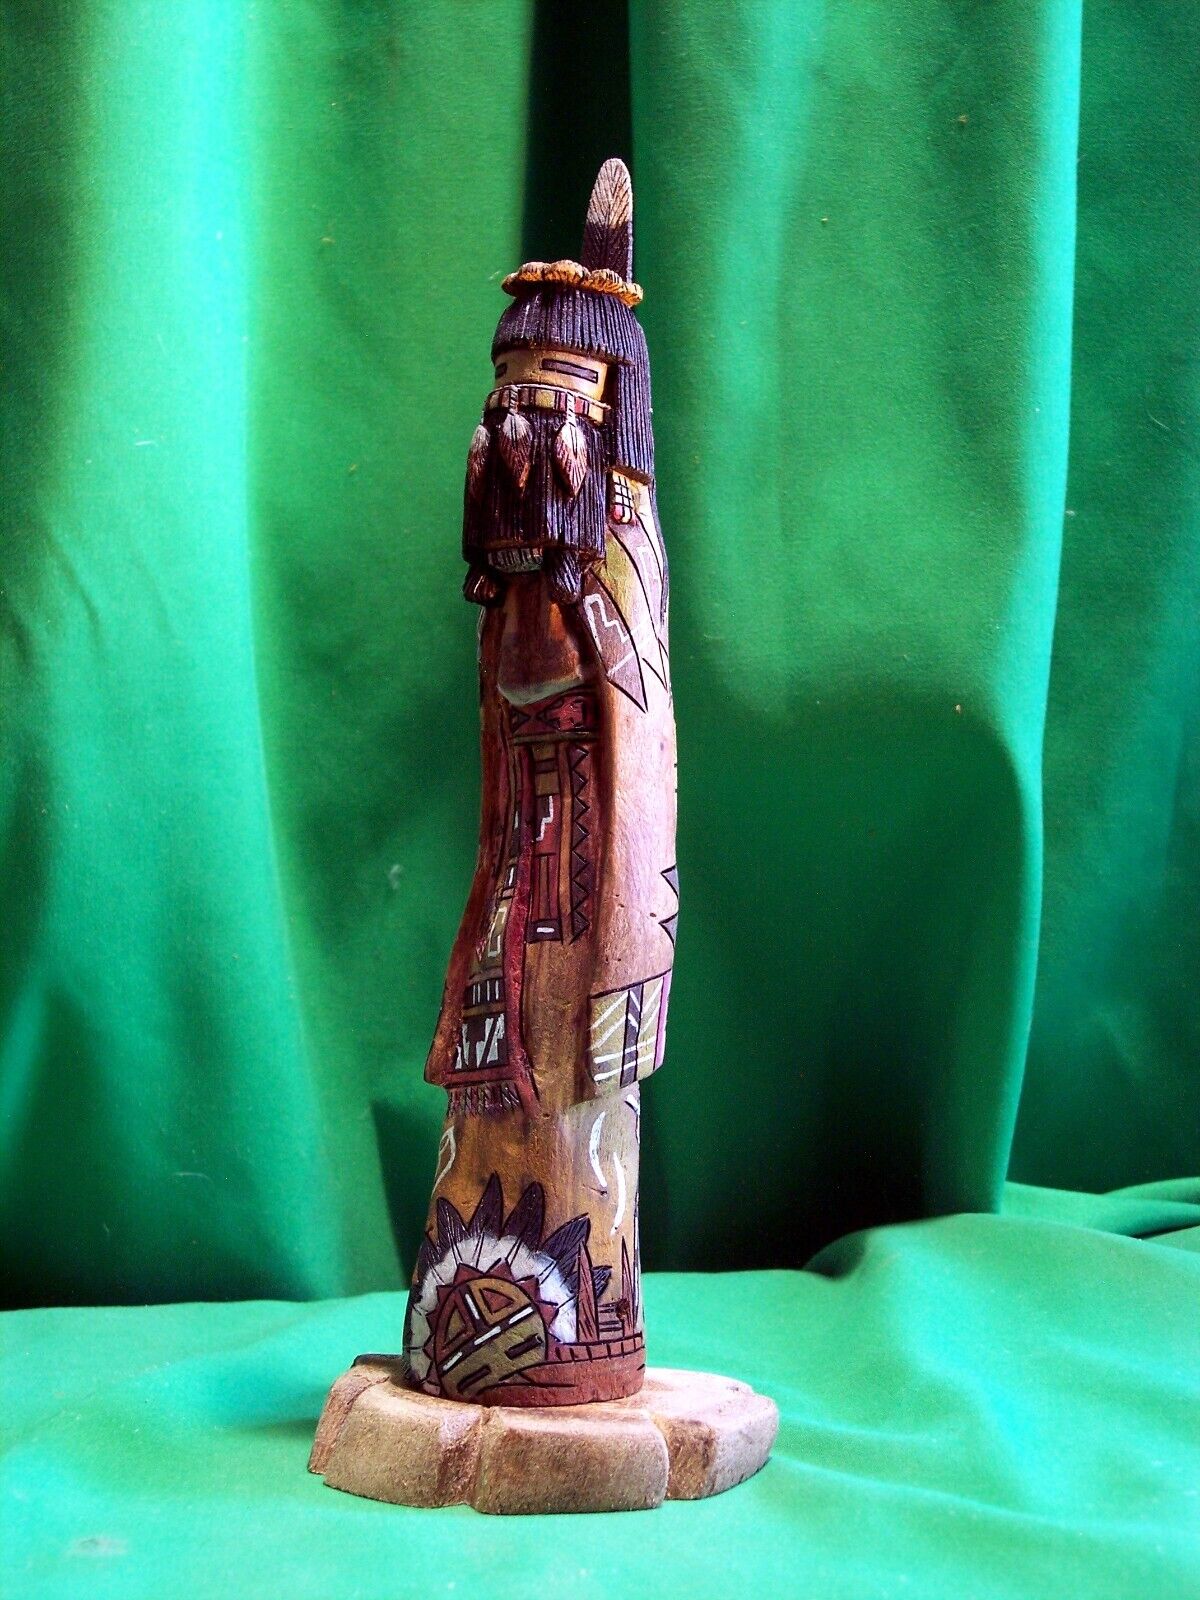 Hopi Kachina Doll - The Longhair Kachina by Wally Grover - Gorgeous